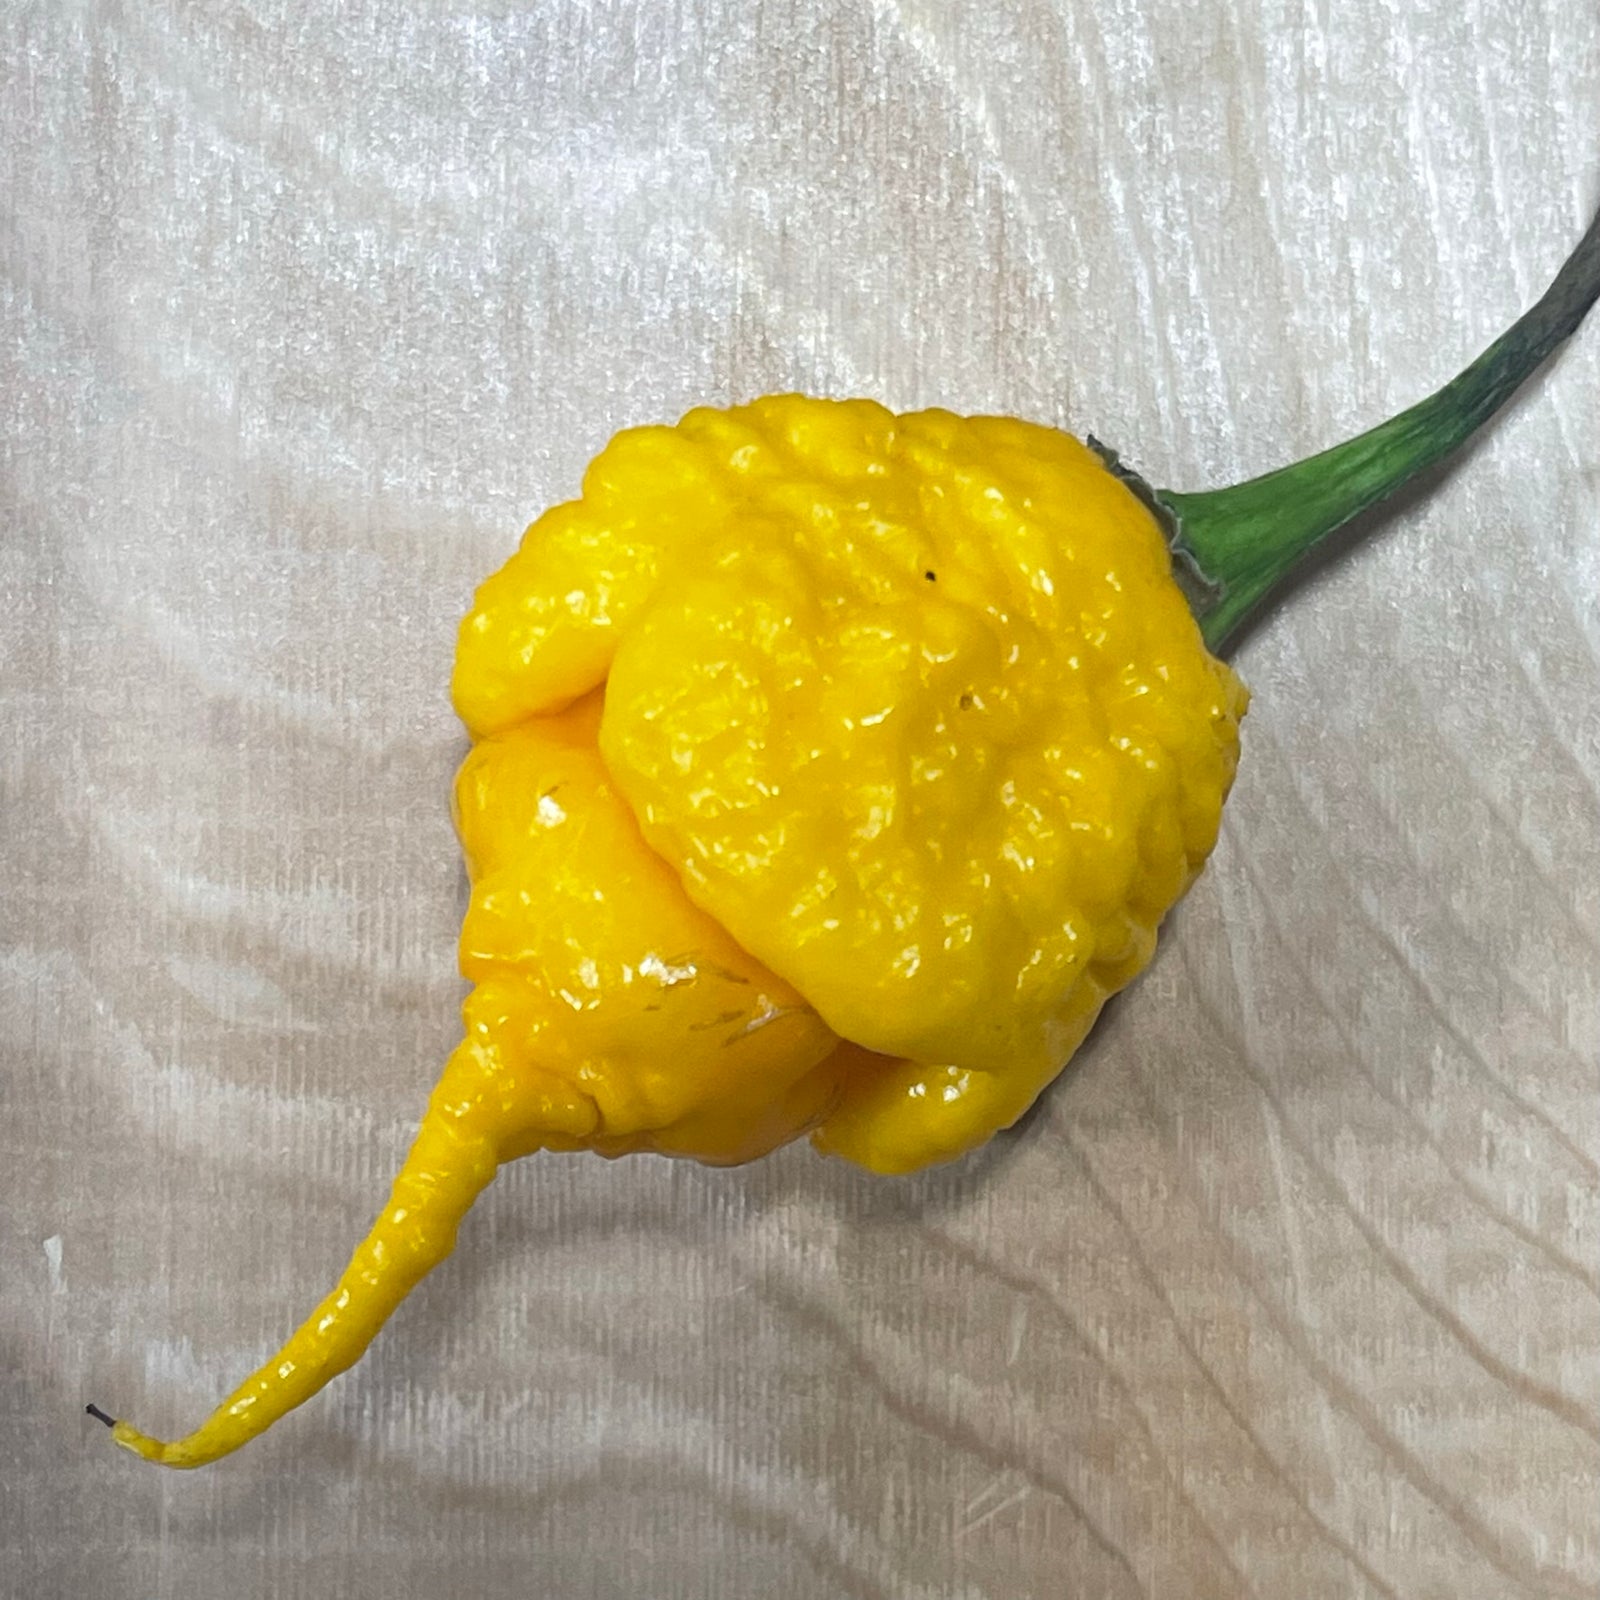 Yellow Brain Strain / Yellow 7 Pot Pepper Seeds